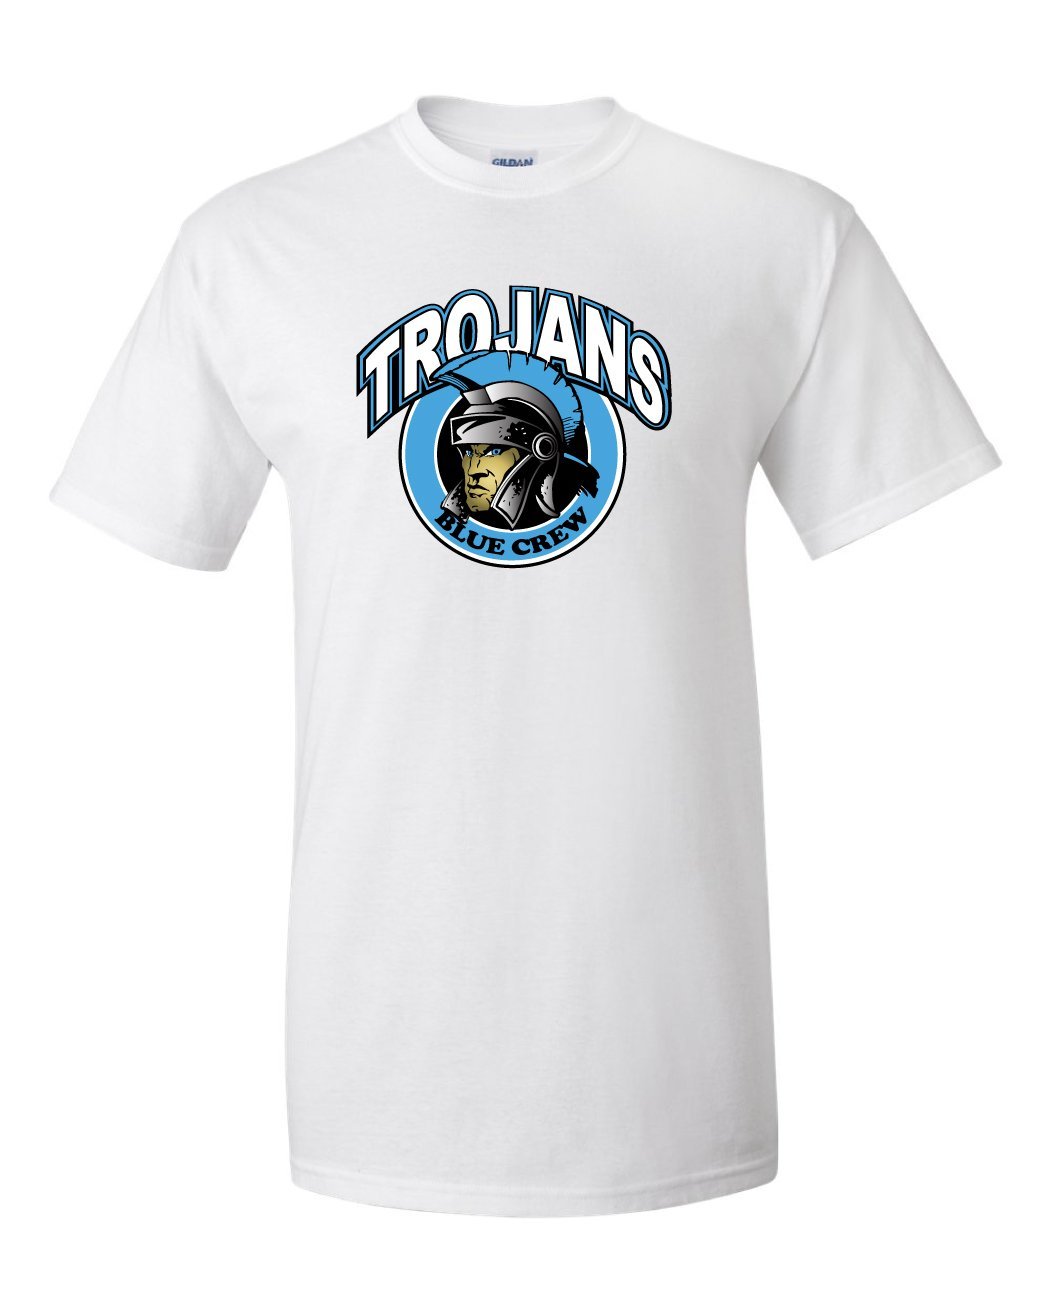 Triopia Trojans - Blue Crew T-shirt